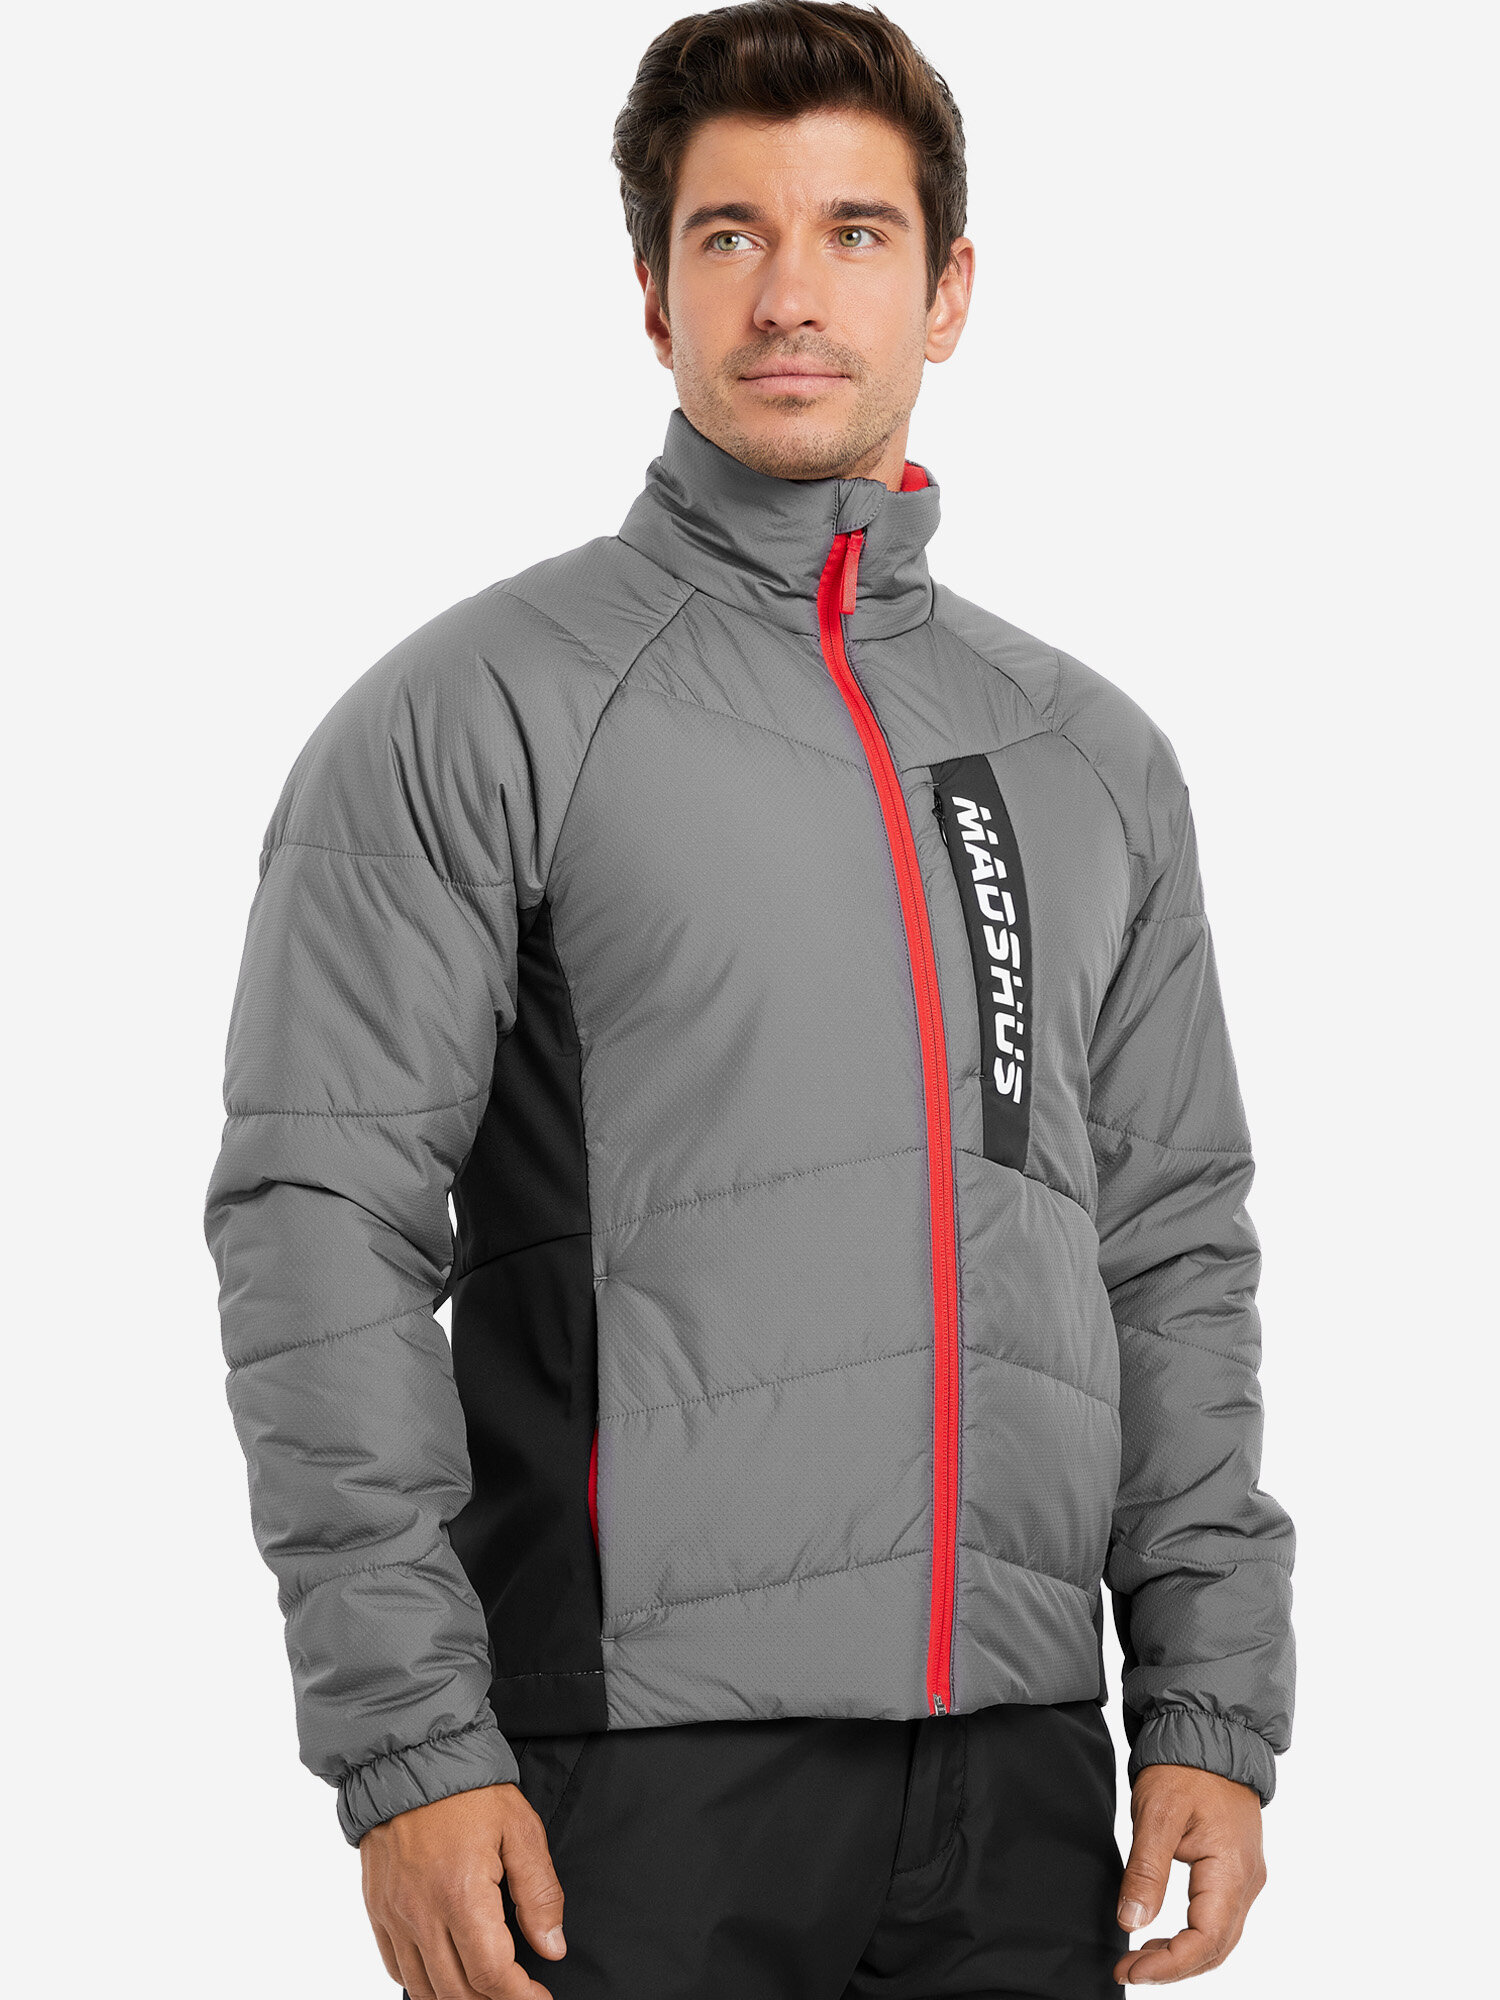 Куртка спортивная MADSHUS, размер 54, серый